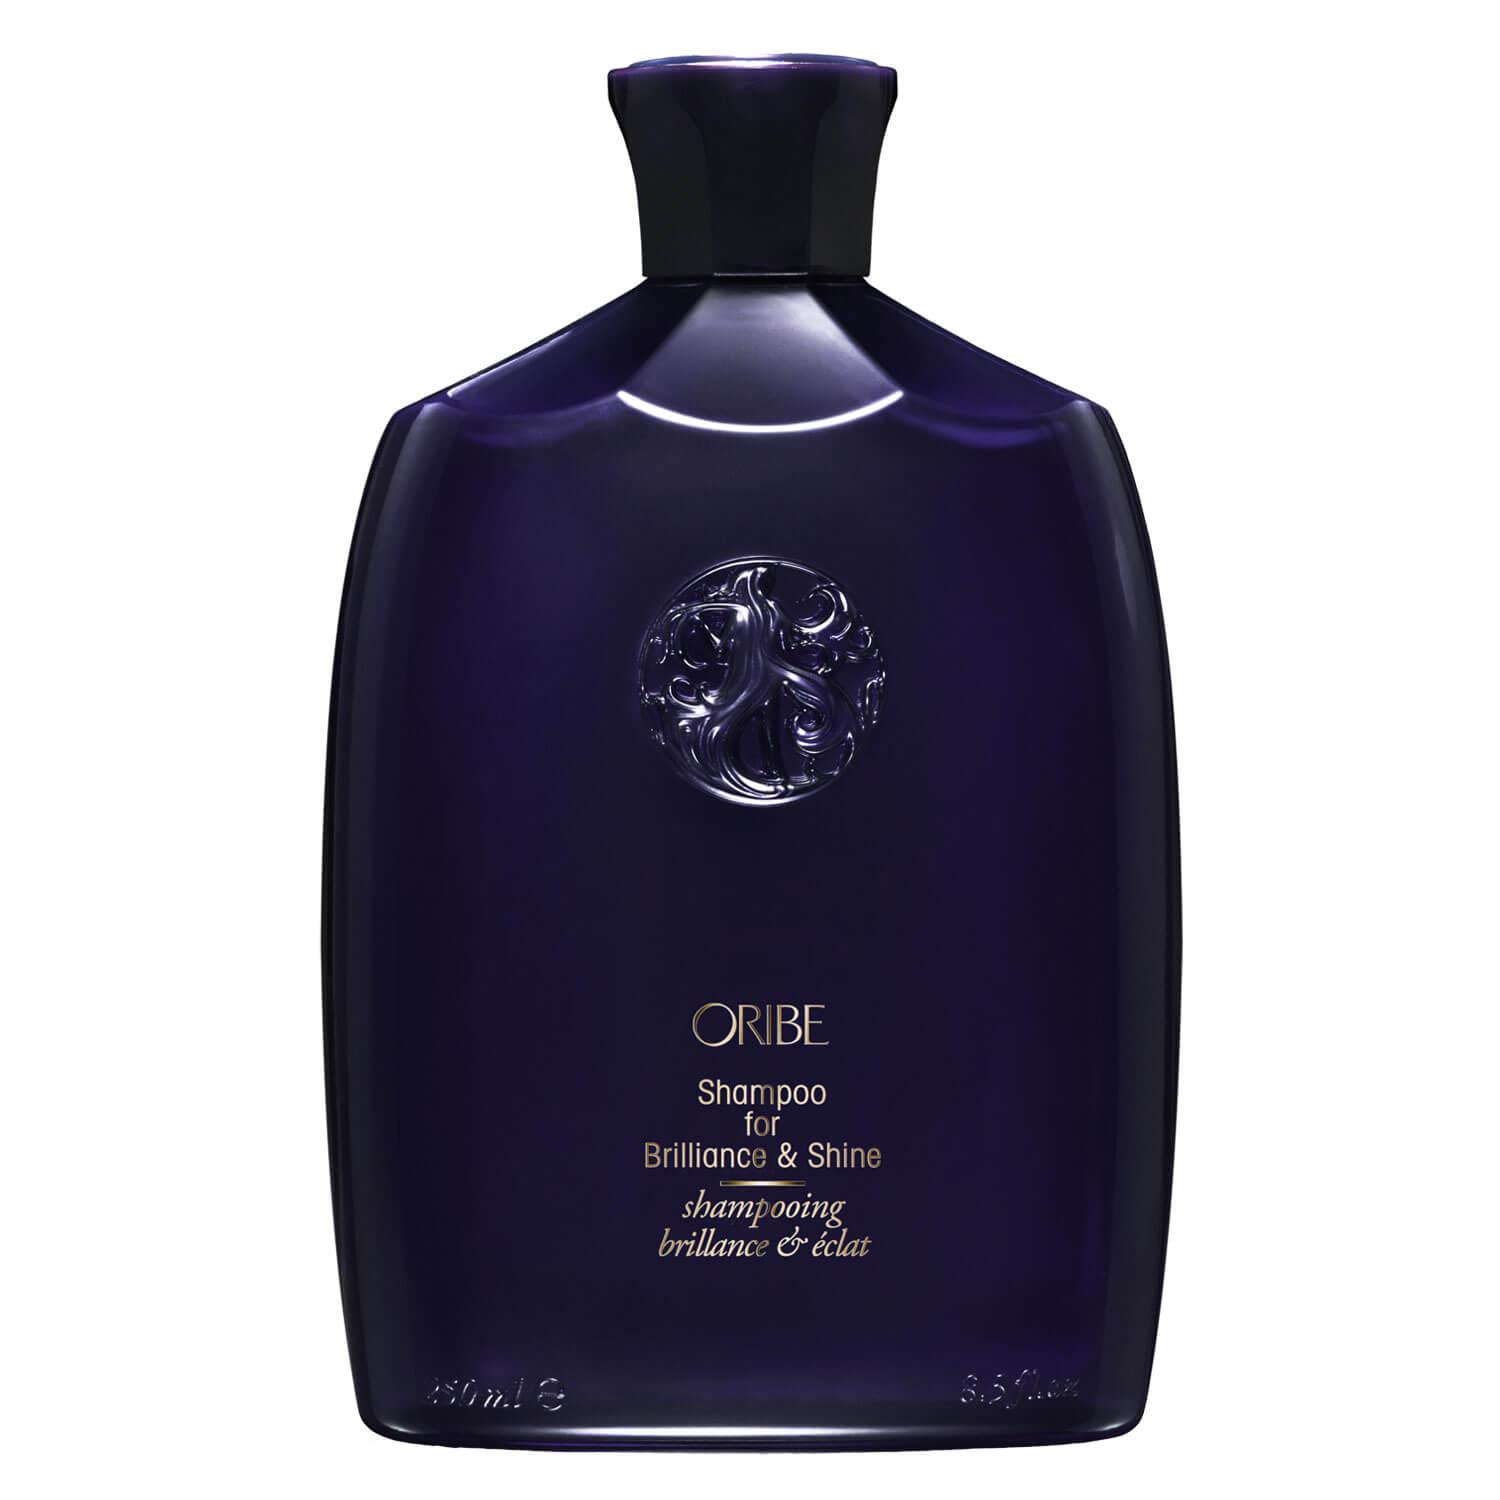 Oribe Care - Shampoo for Brilliance & Shine